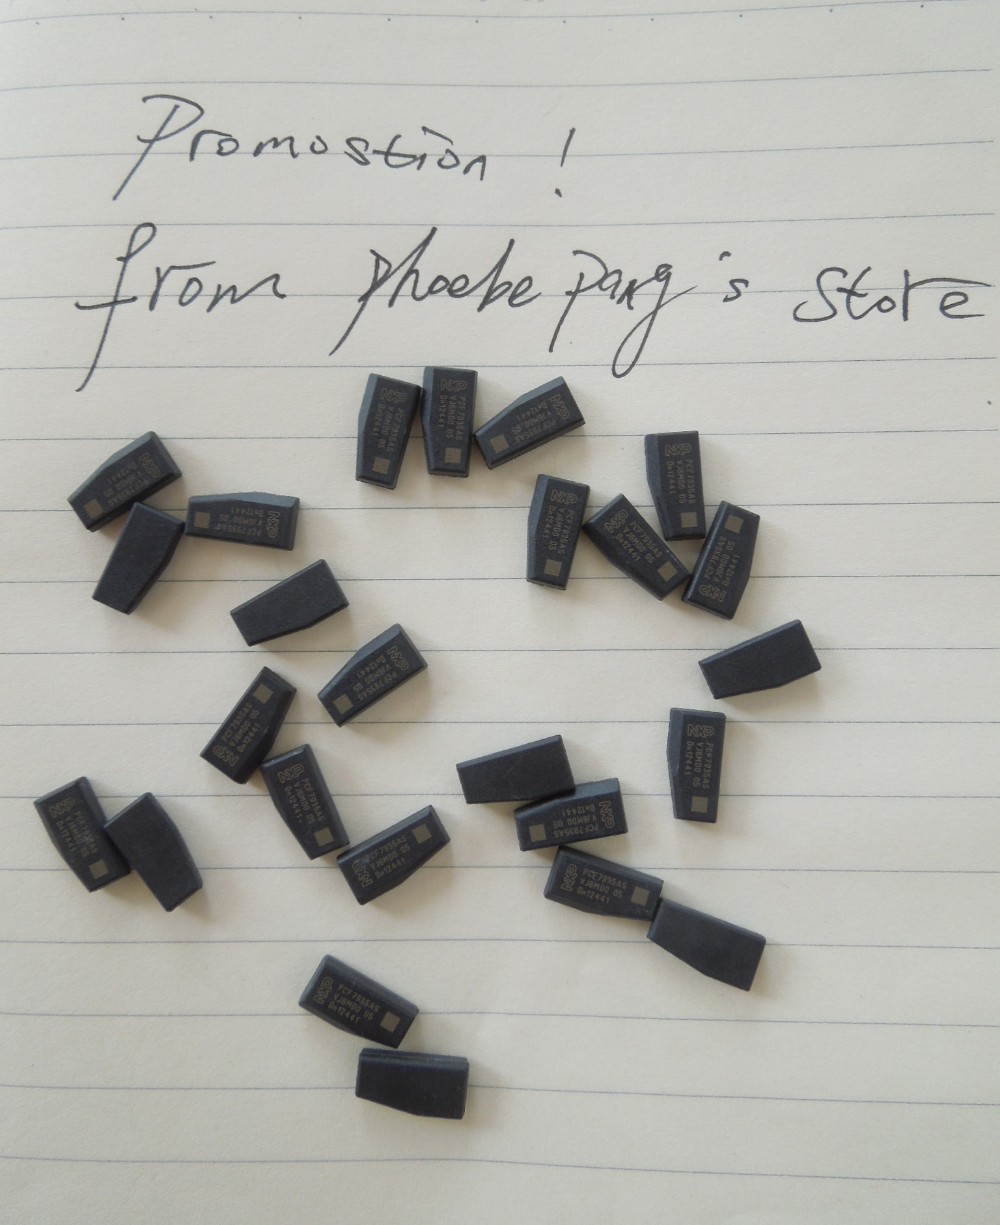 pcf7935as pcf 7935 as pcf7935 car key locksmith tools transponder chip 5